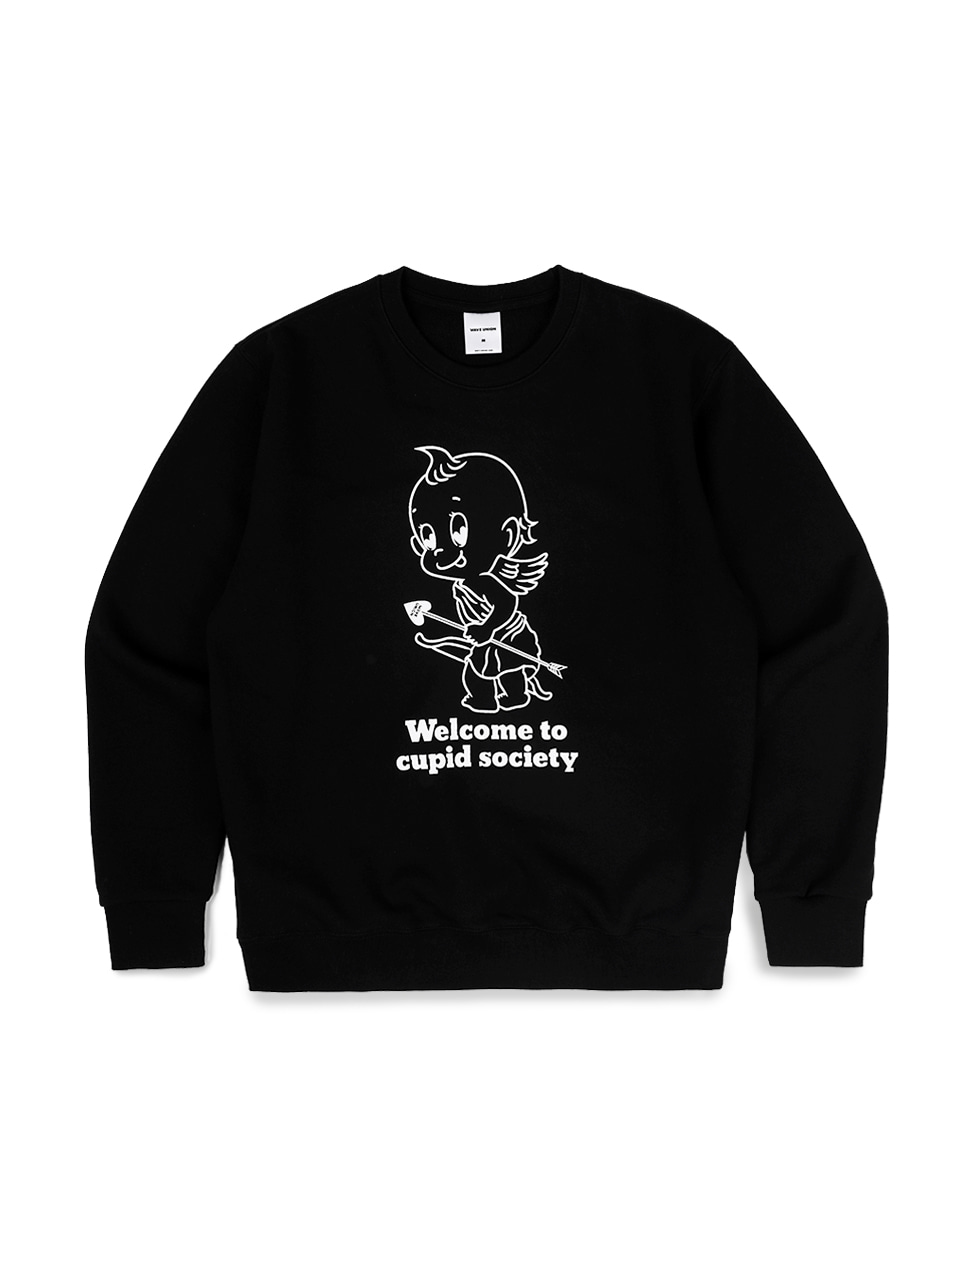 Cupid society Sweatshirt black